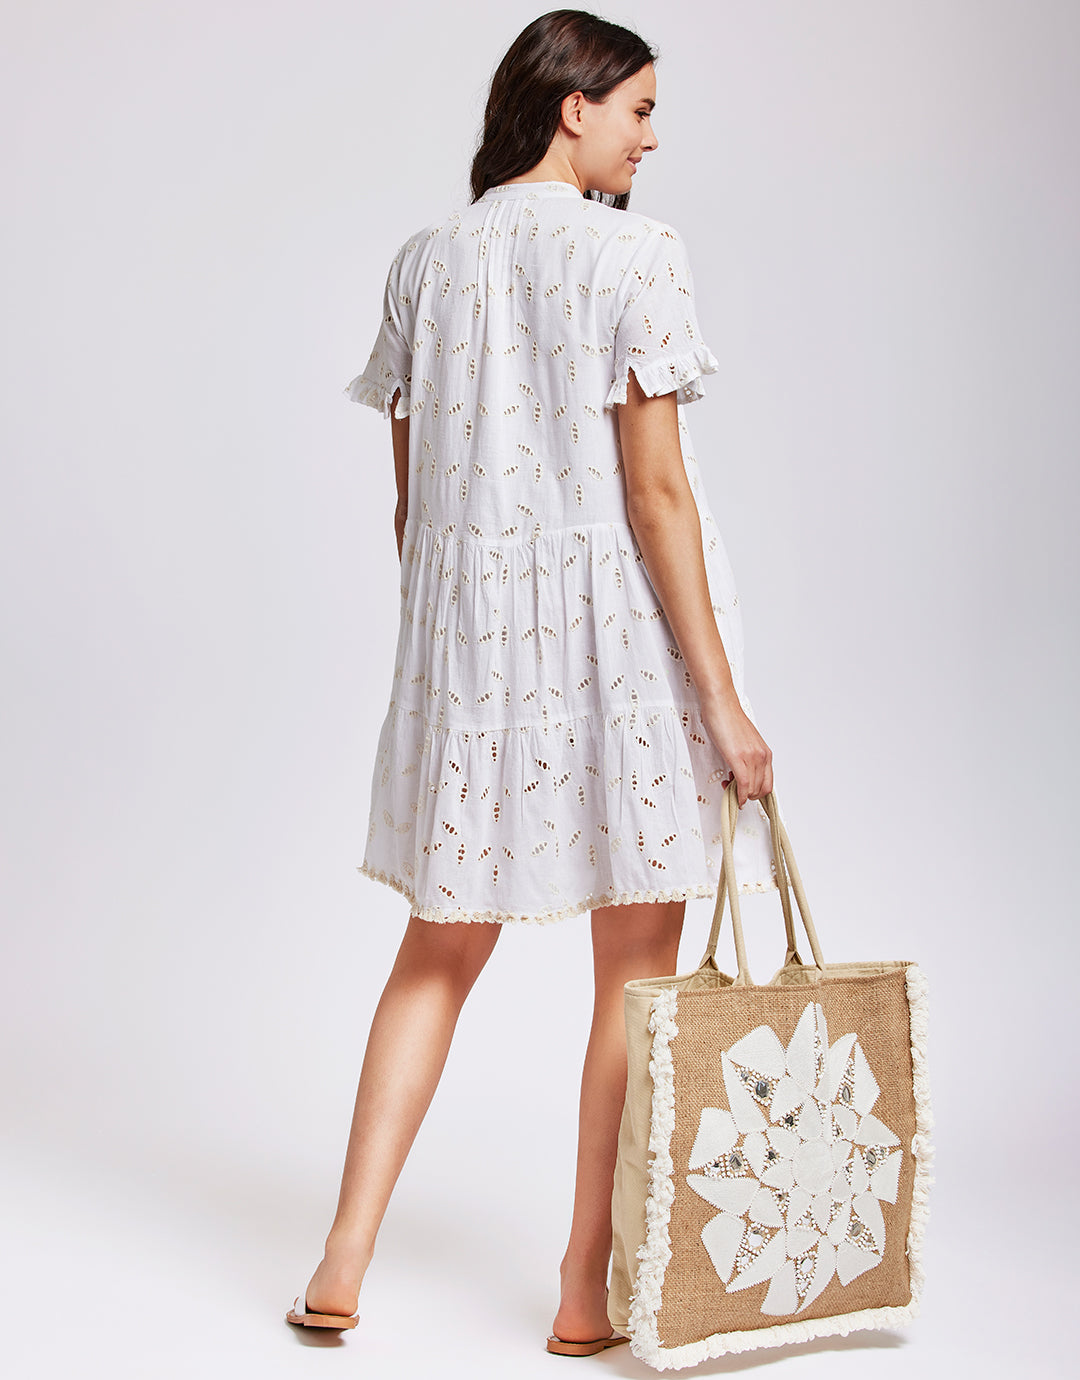 Angie Short Sleeved Dress - White - Simply Beach UK